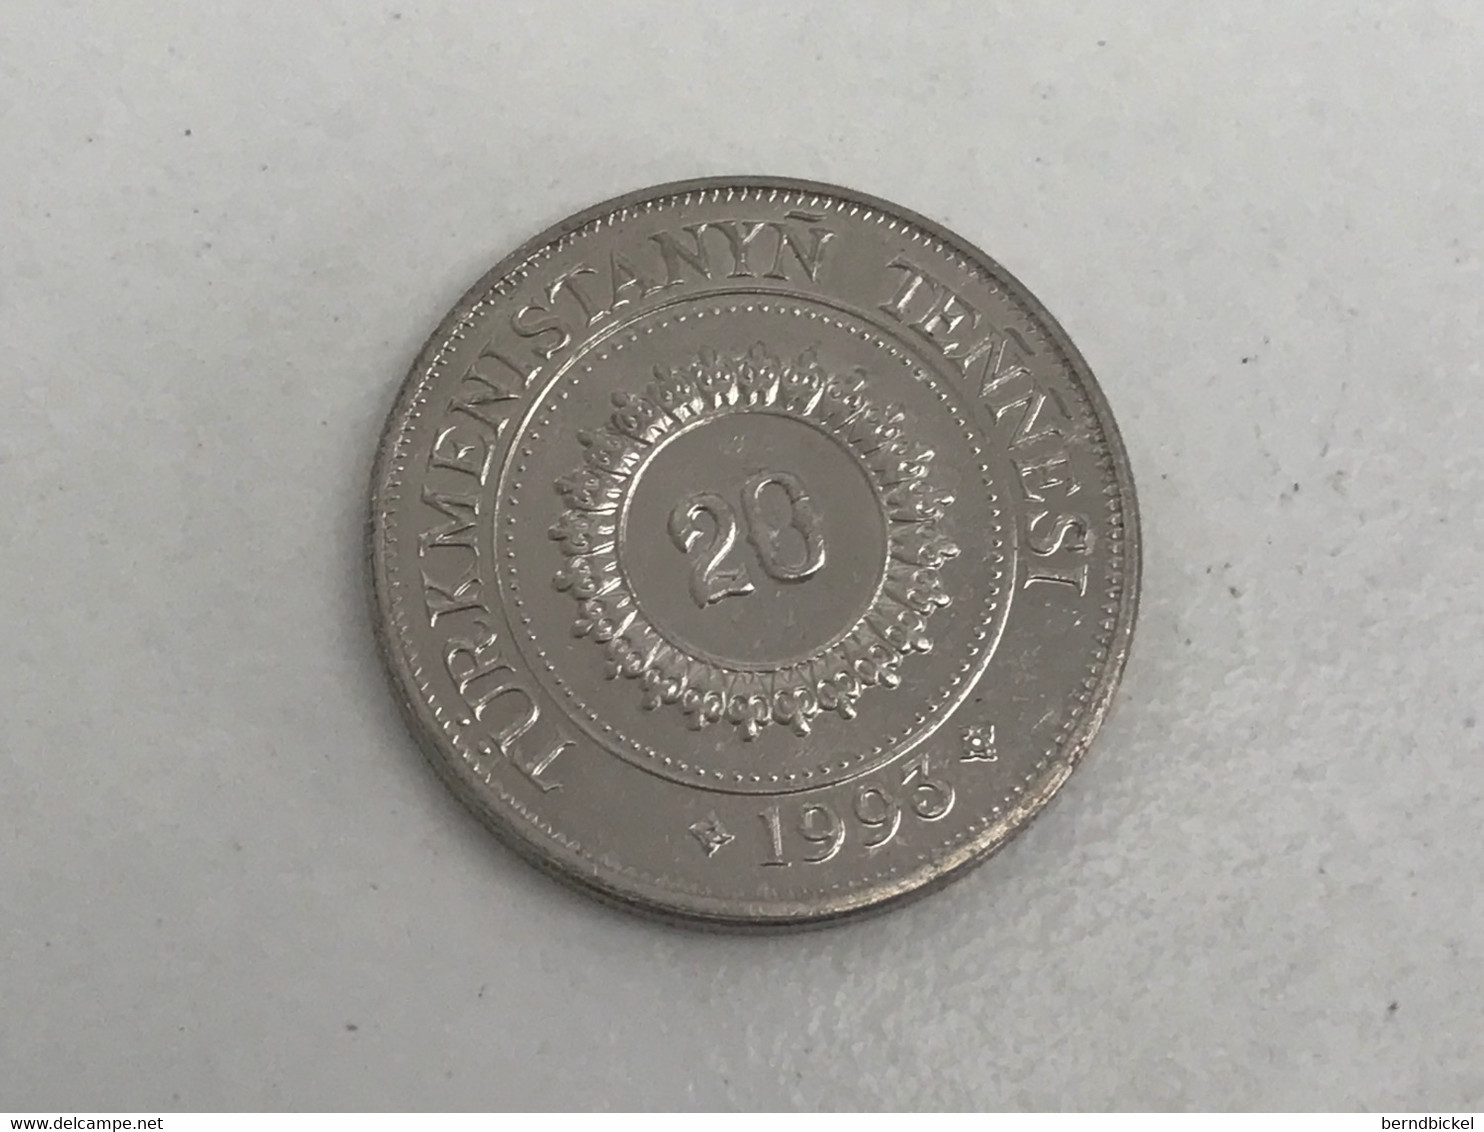 Münze Münzen Umlaufmünze Turkmenistan 20 Tenge 1993 - Turkmenistan